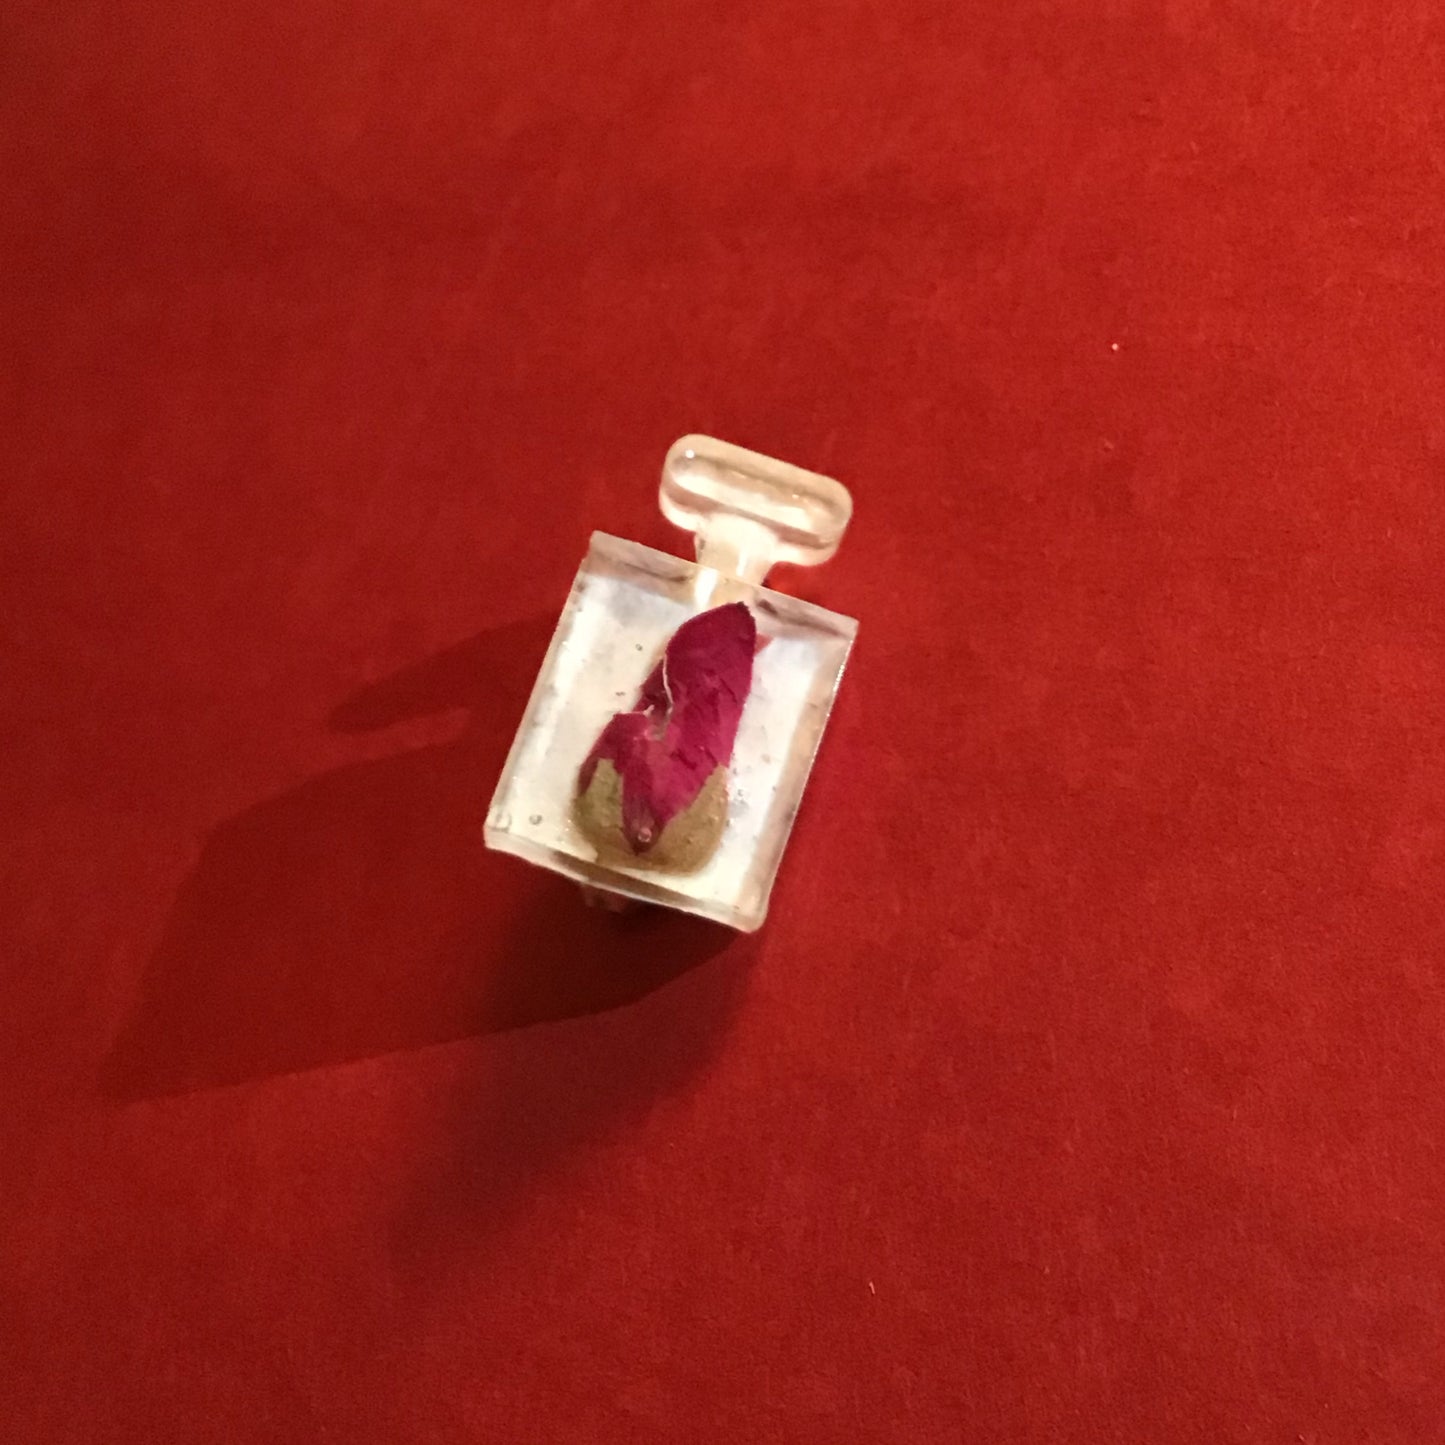 Rosebud Parfum Bottle Pin